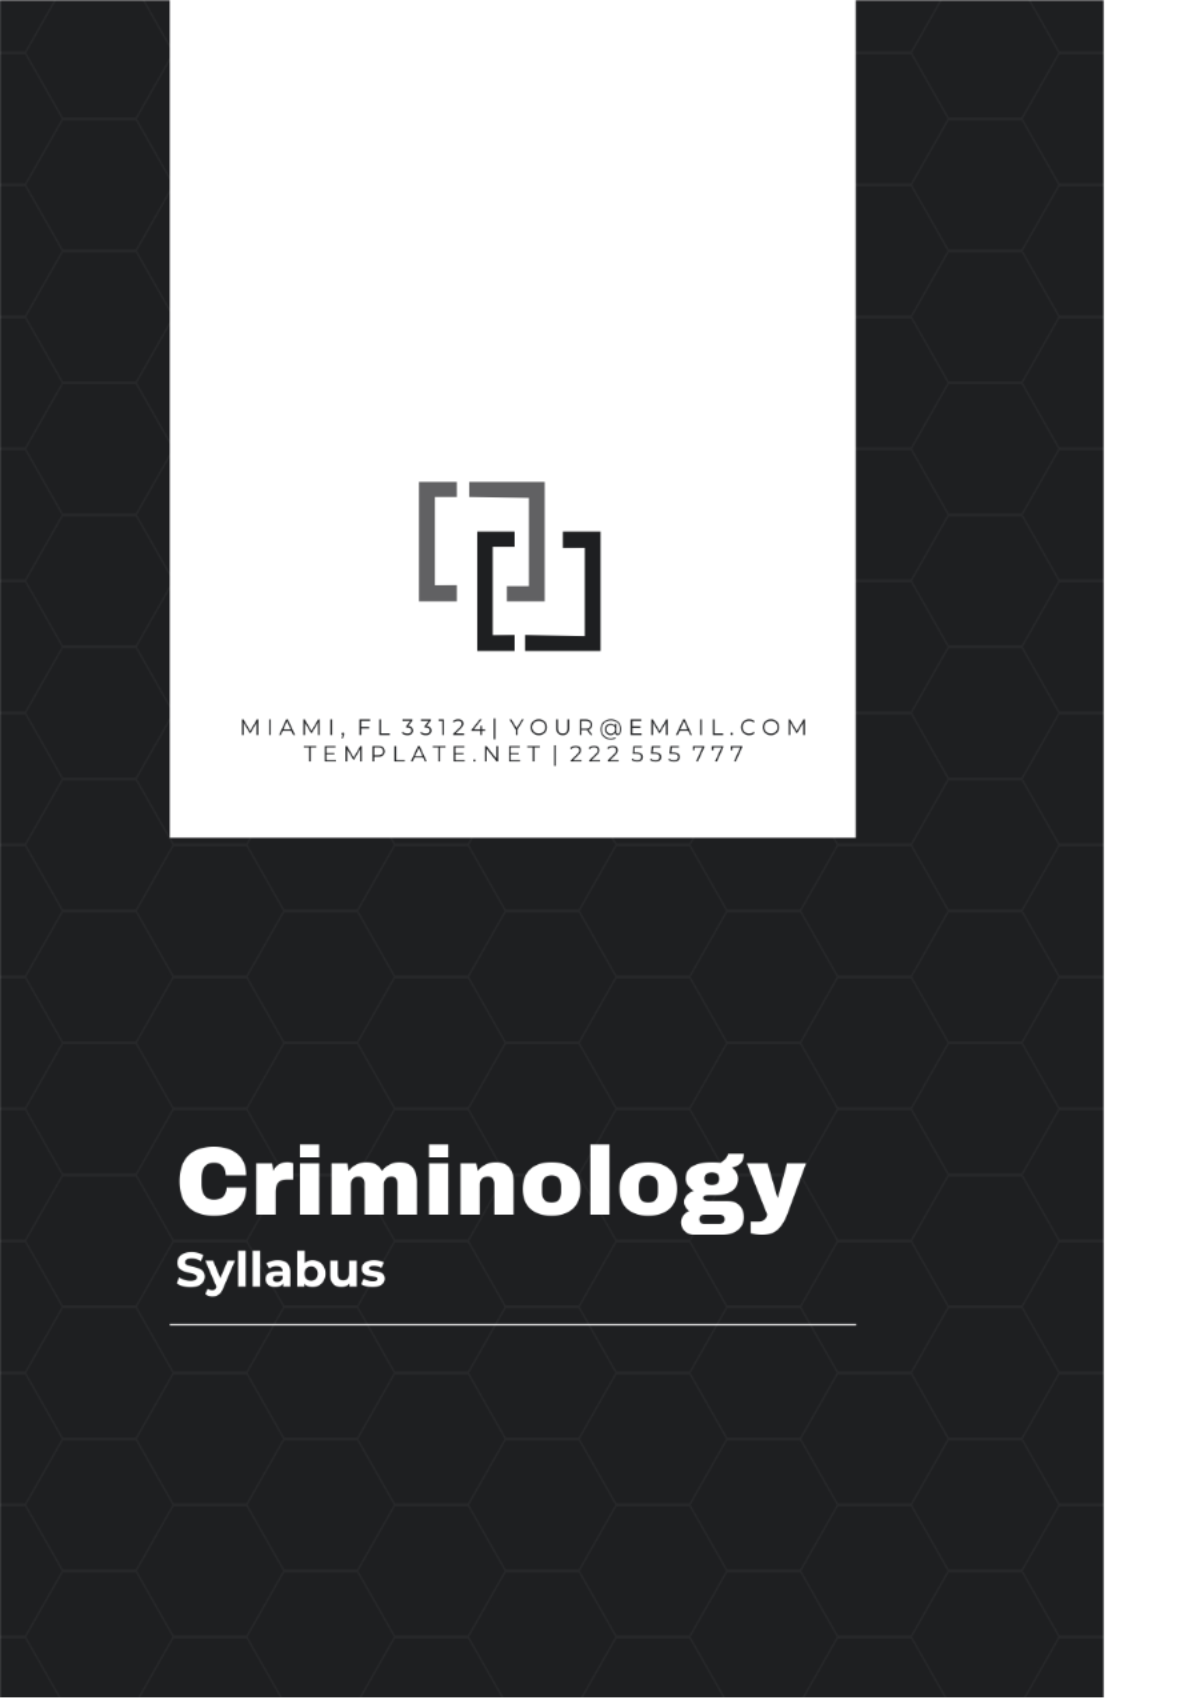 Criminology Syllabus Template